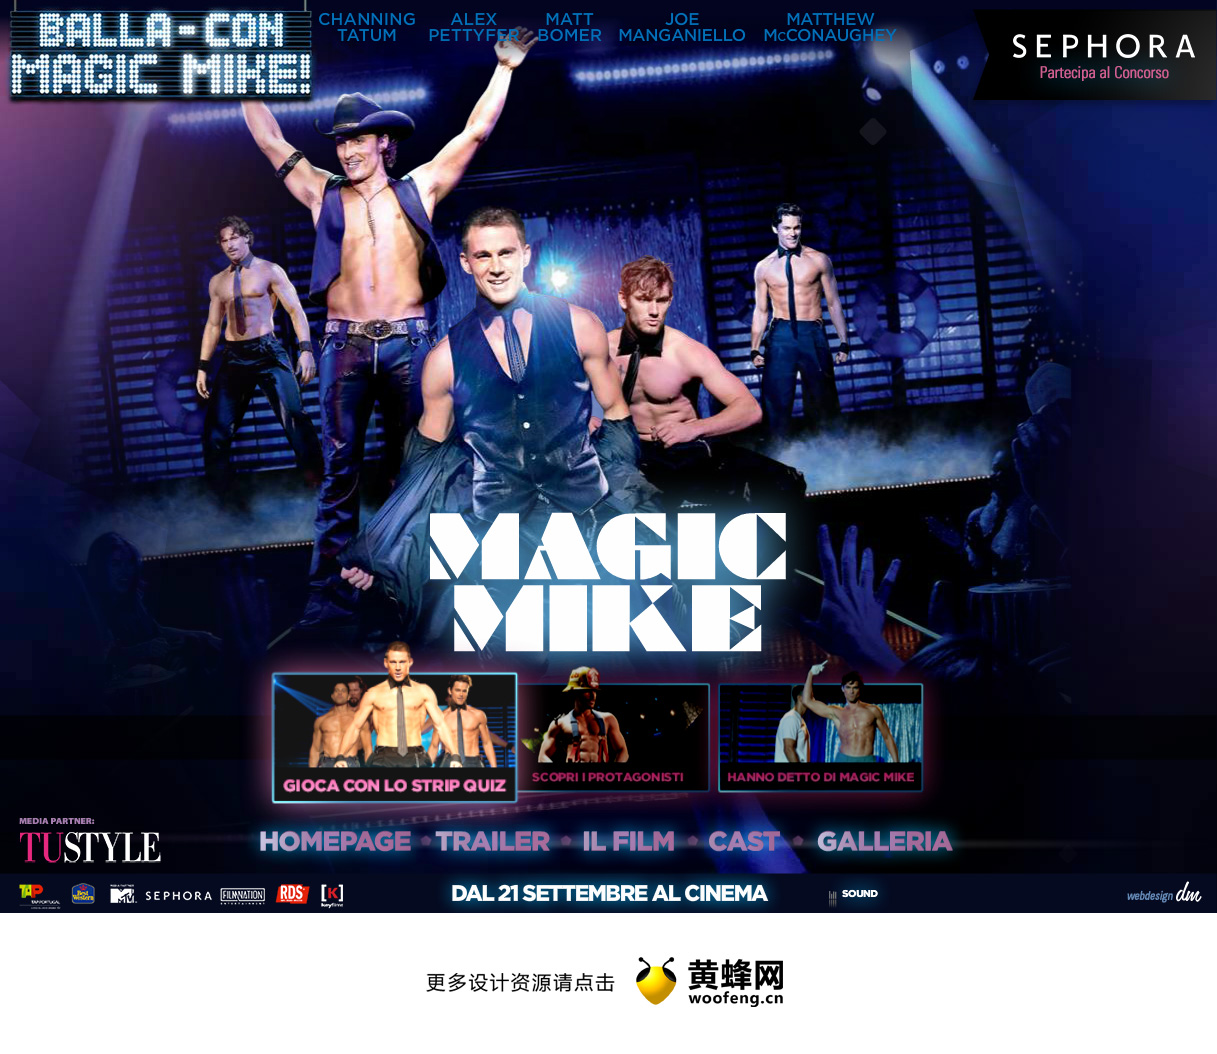 Magic Mike魔力迈克电影网站，来源自黄蜂网https://woofeng.cn/web/